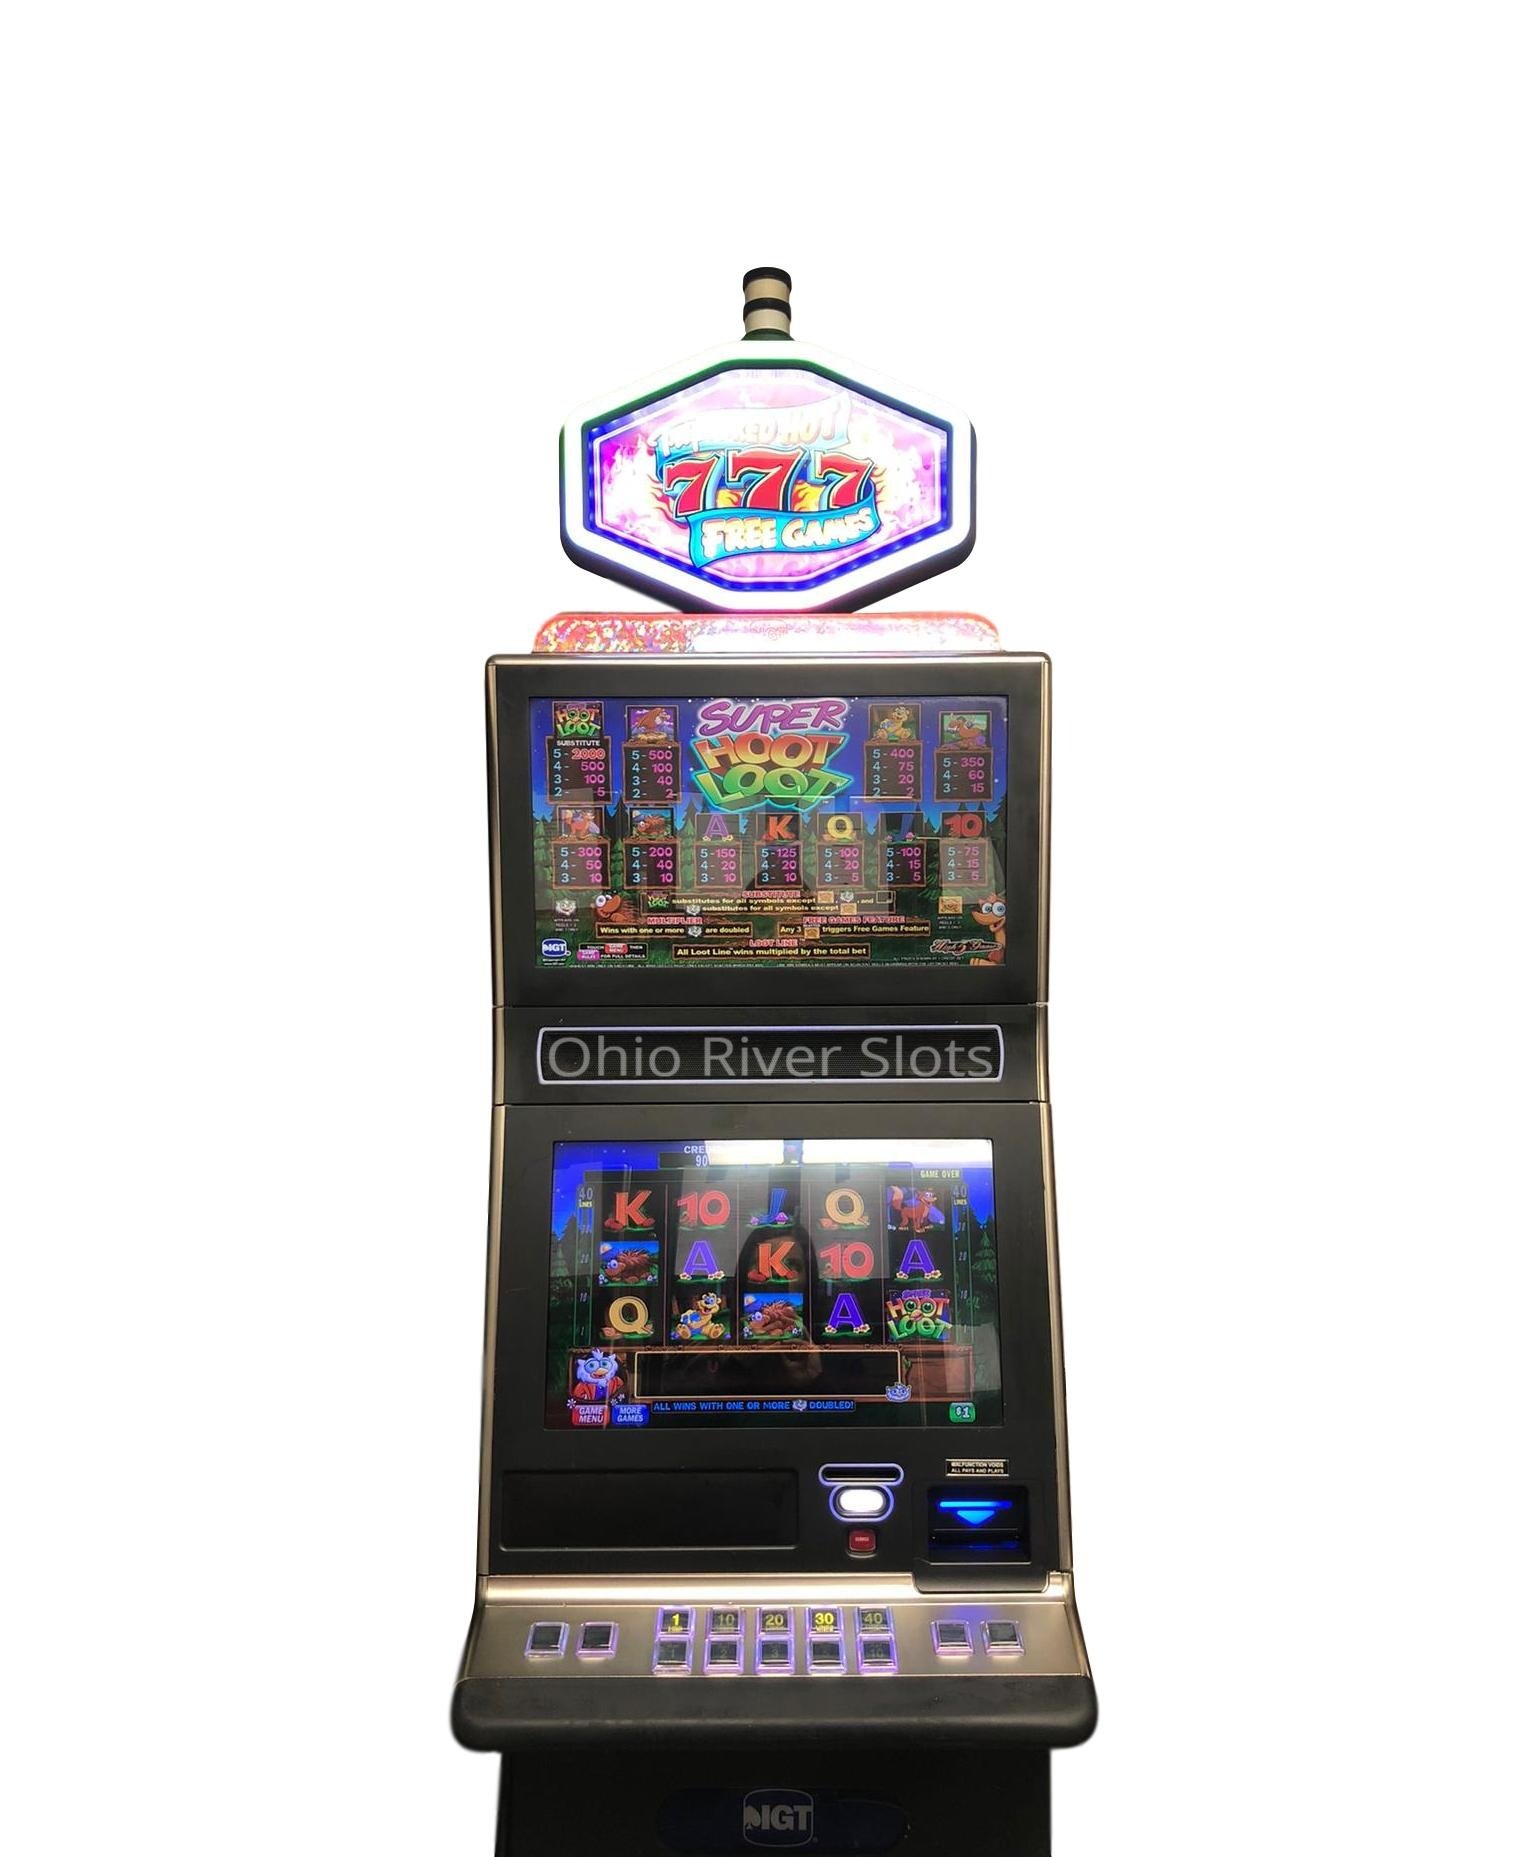 Hoot loot slot machine for sale